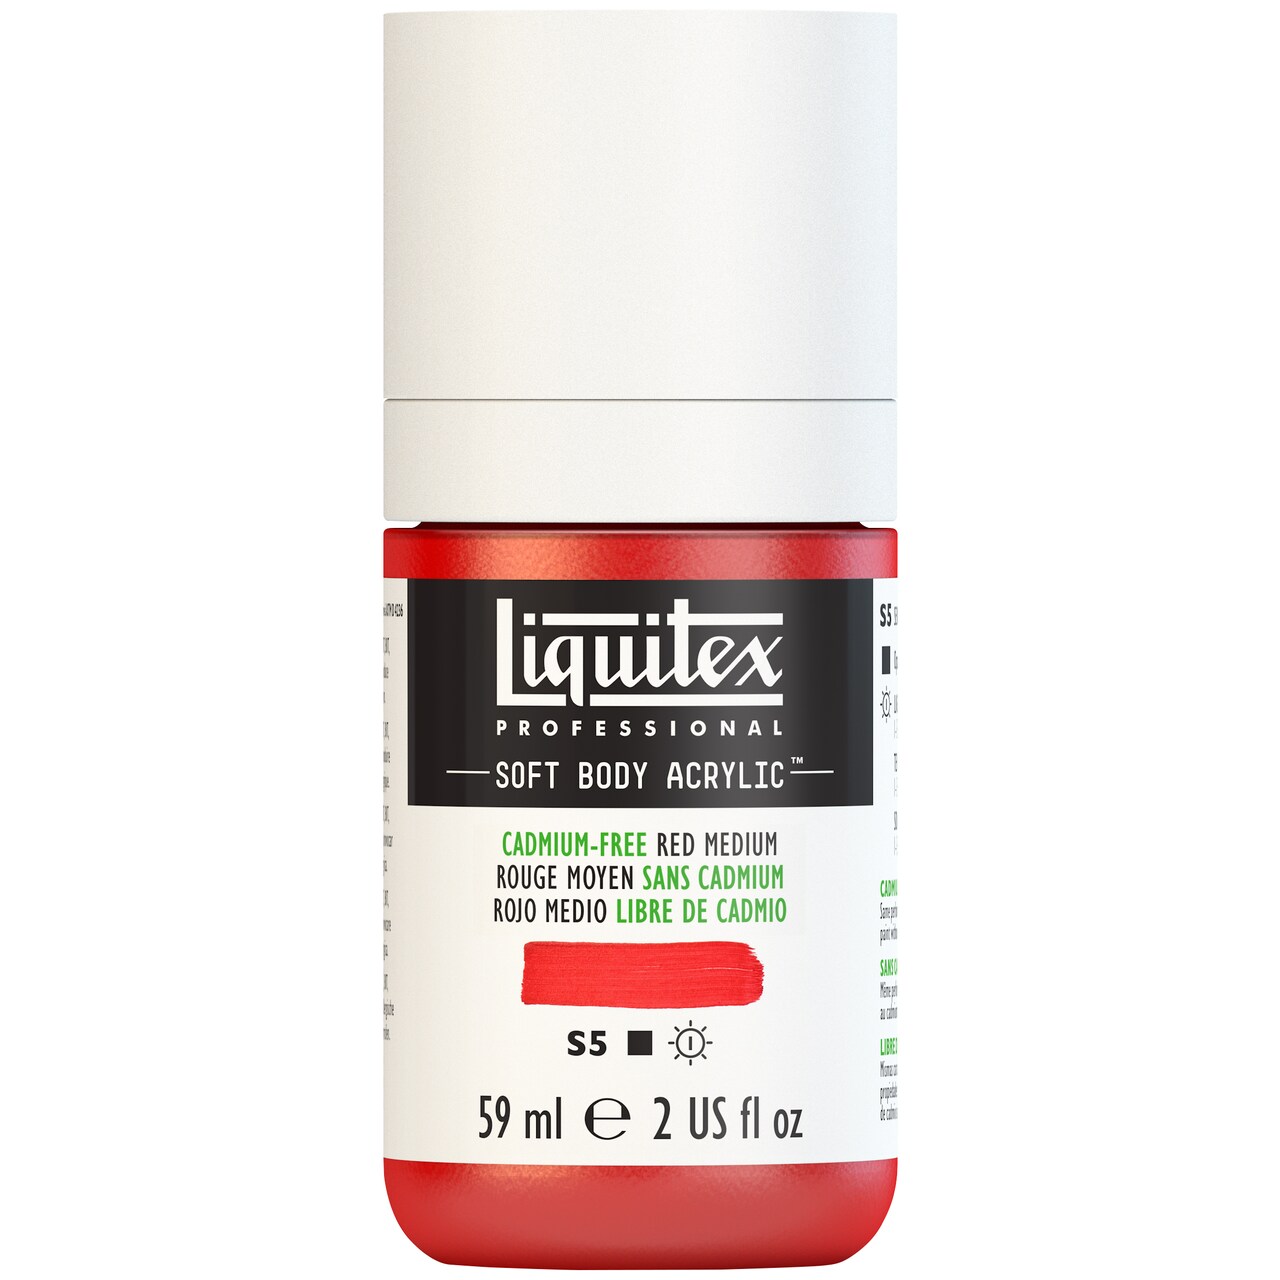 Liquitex Professional Soft Body Acrylic Color, 2 Oz. Bottle, Cadmium-Free Red Medium